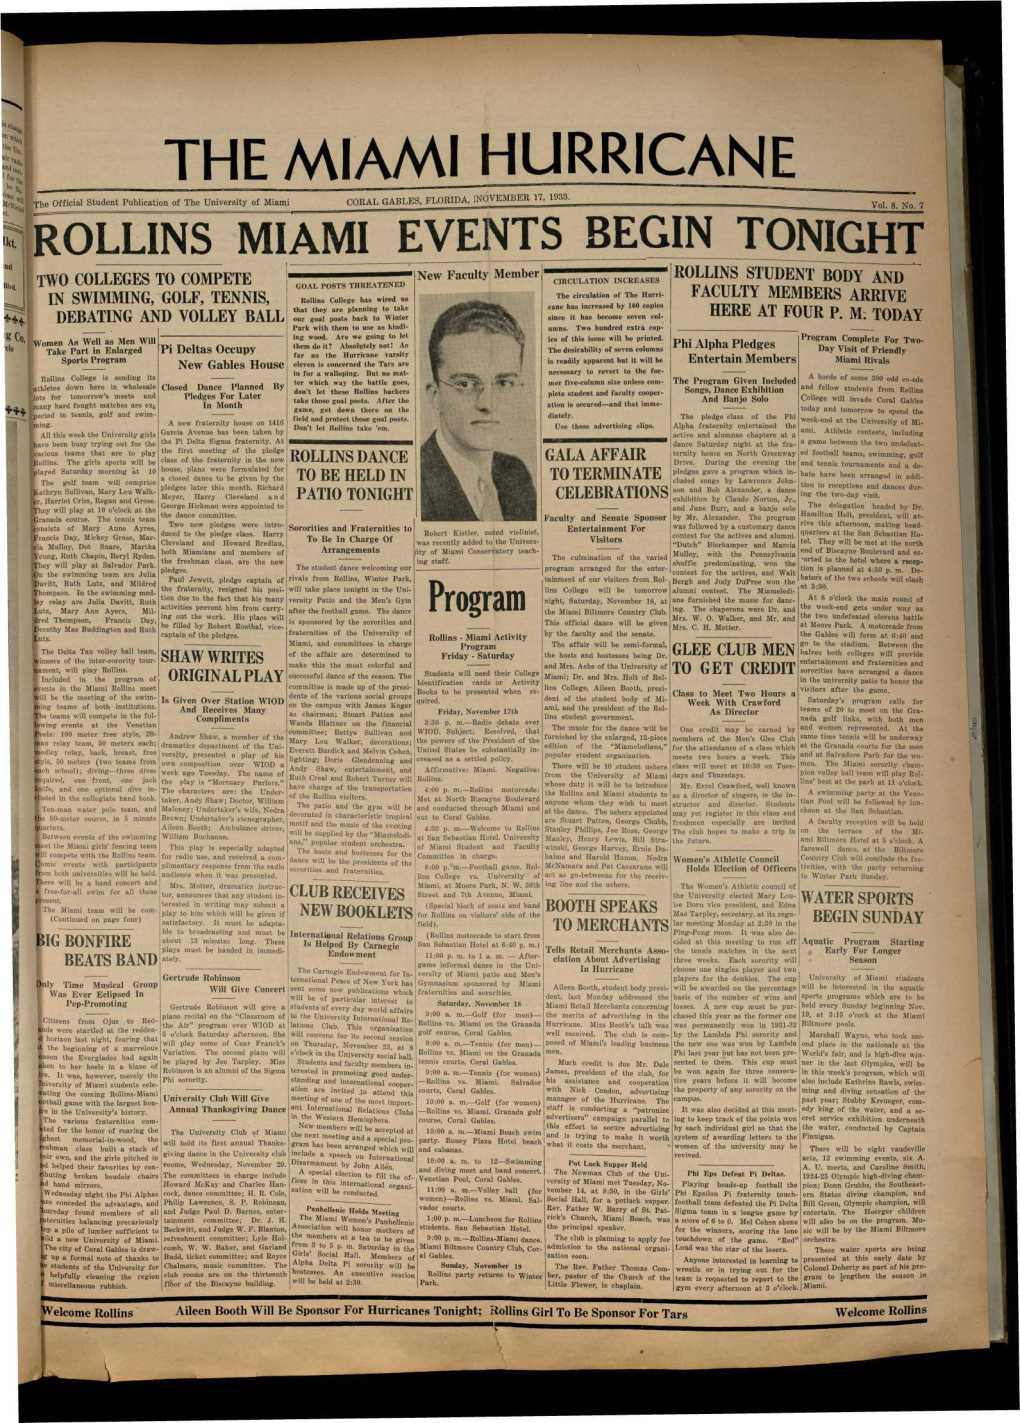 Rollins Miami Events Begin Tonight